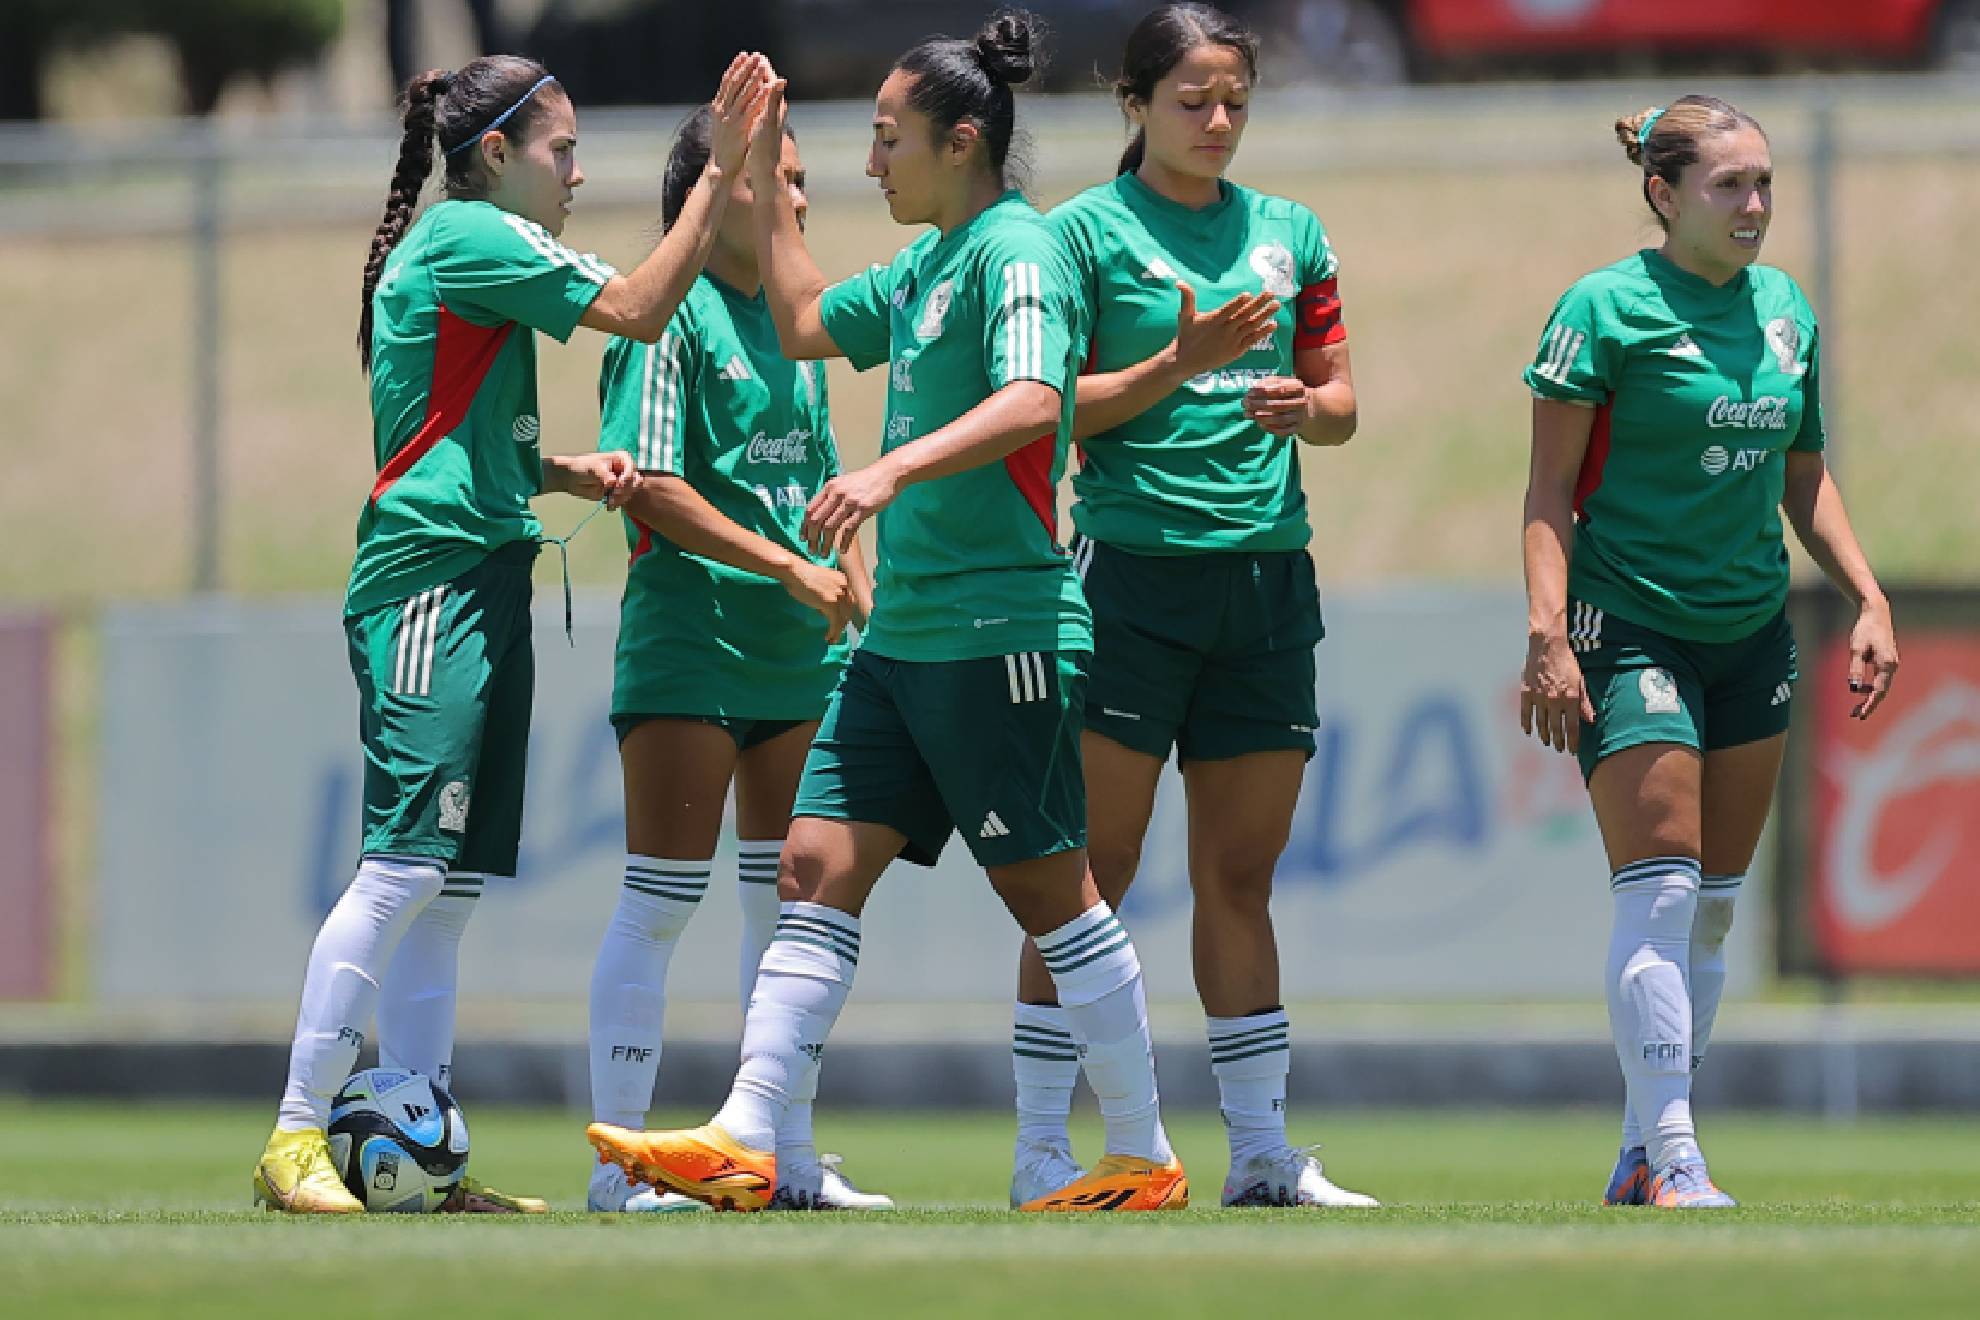 La Seleccin Mexiccana Femenil gole 5-0 al Toluca rumbo a Juegos Centroamericanos.